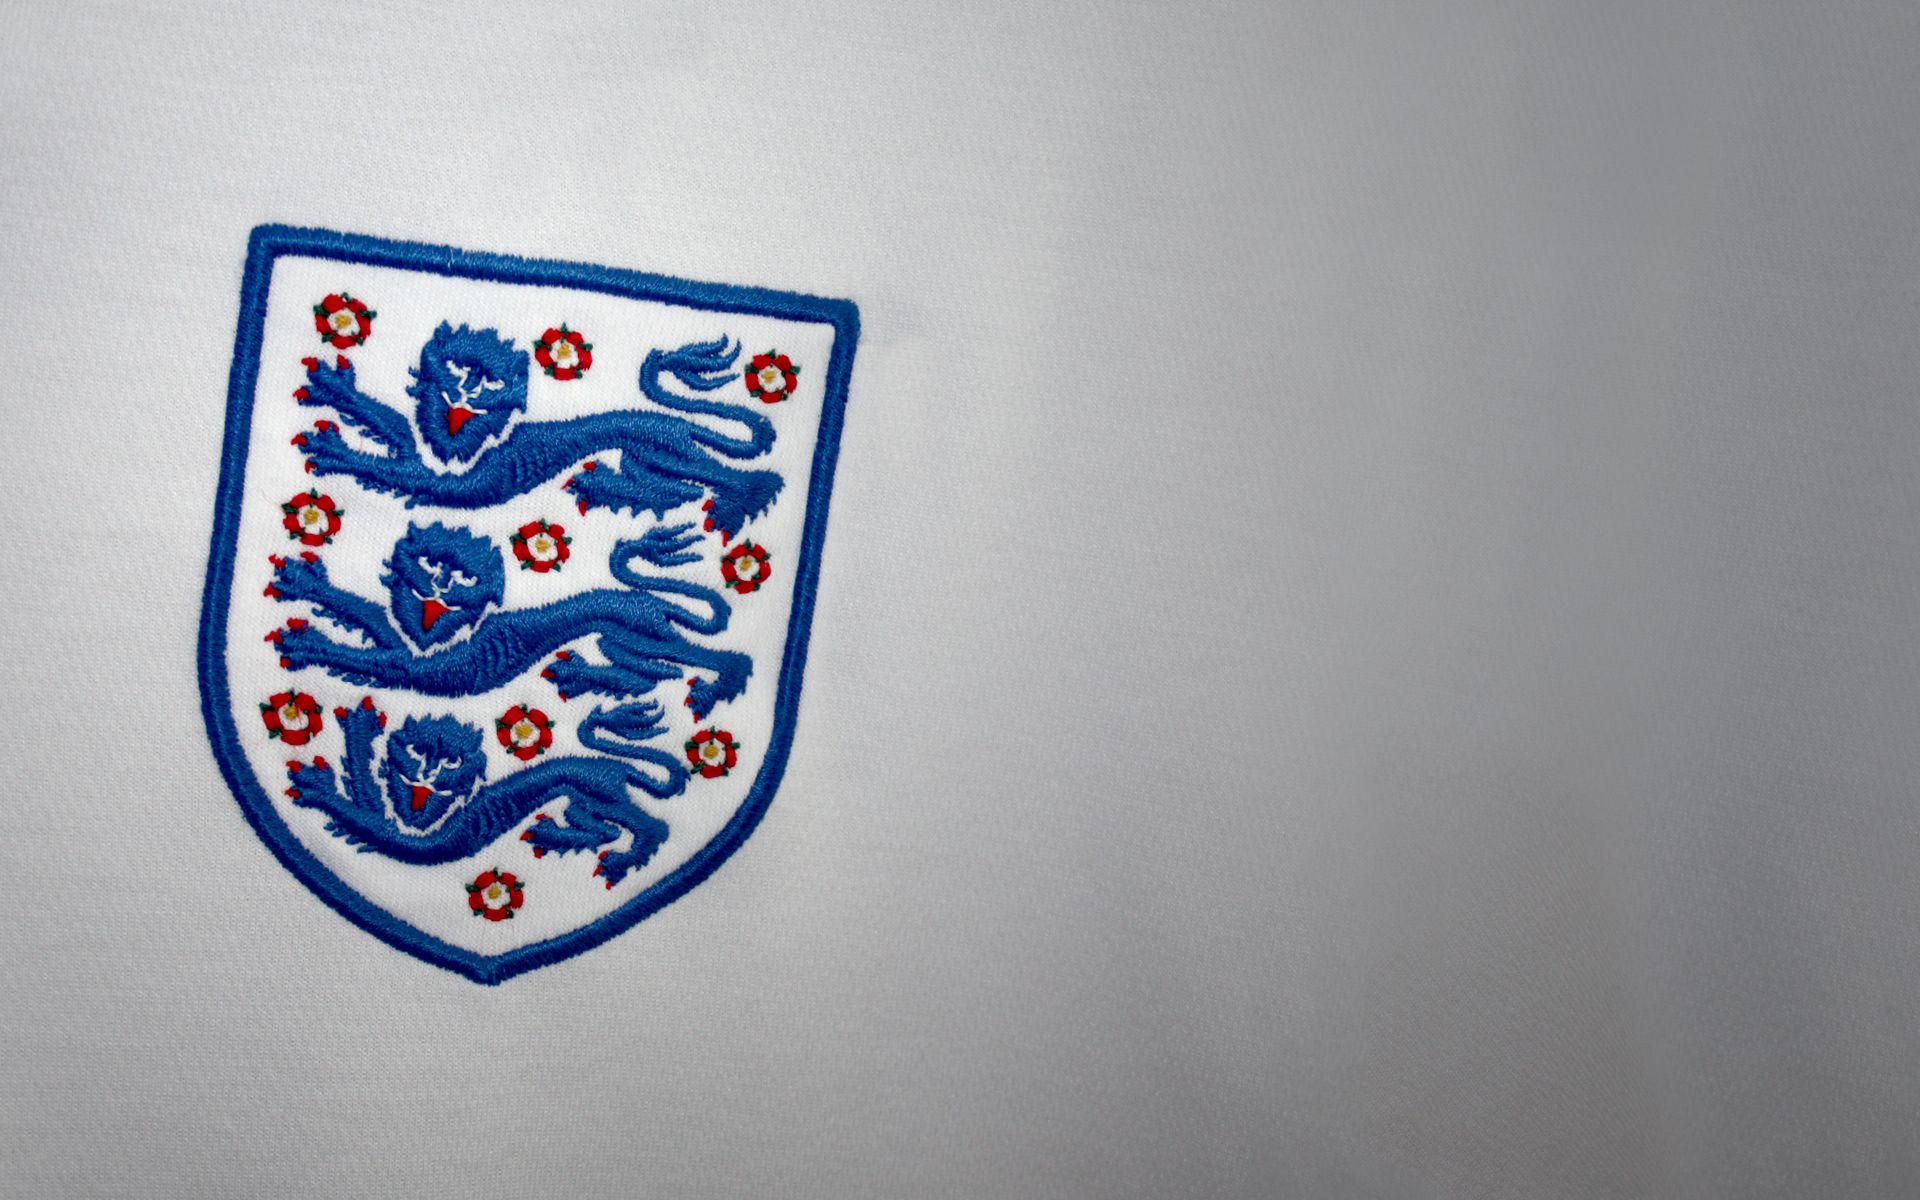 England Football Team Wallpapers - Wallpaper Cave